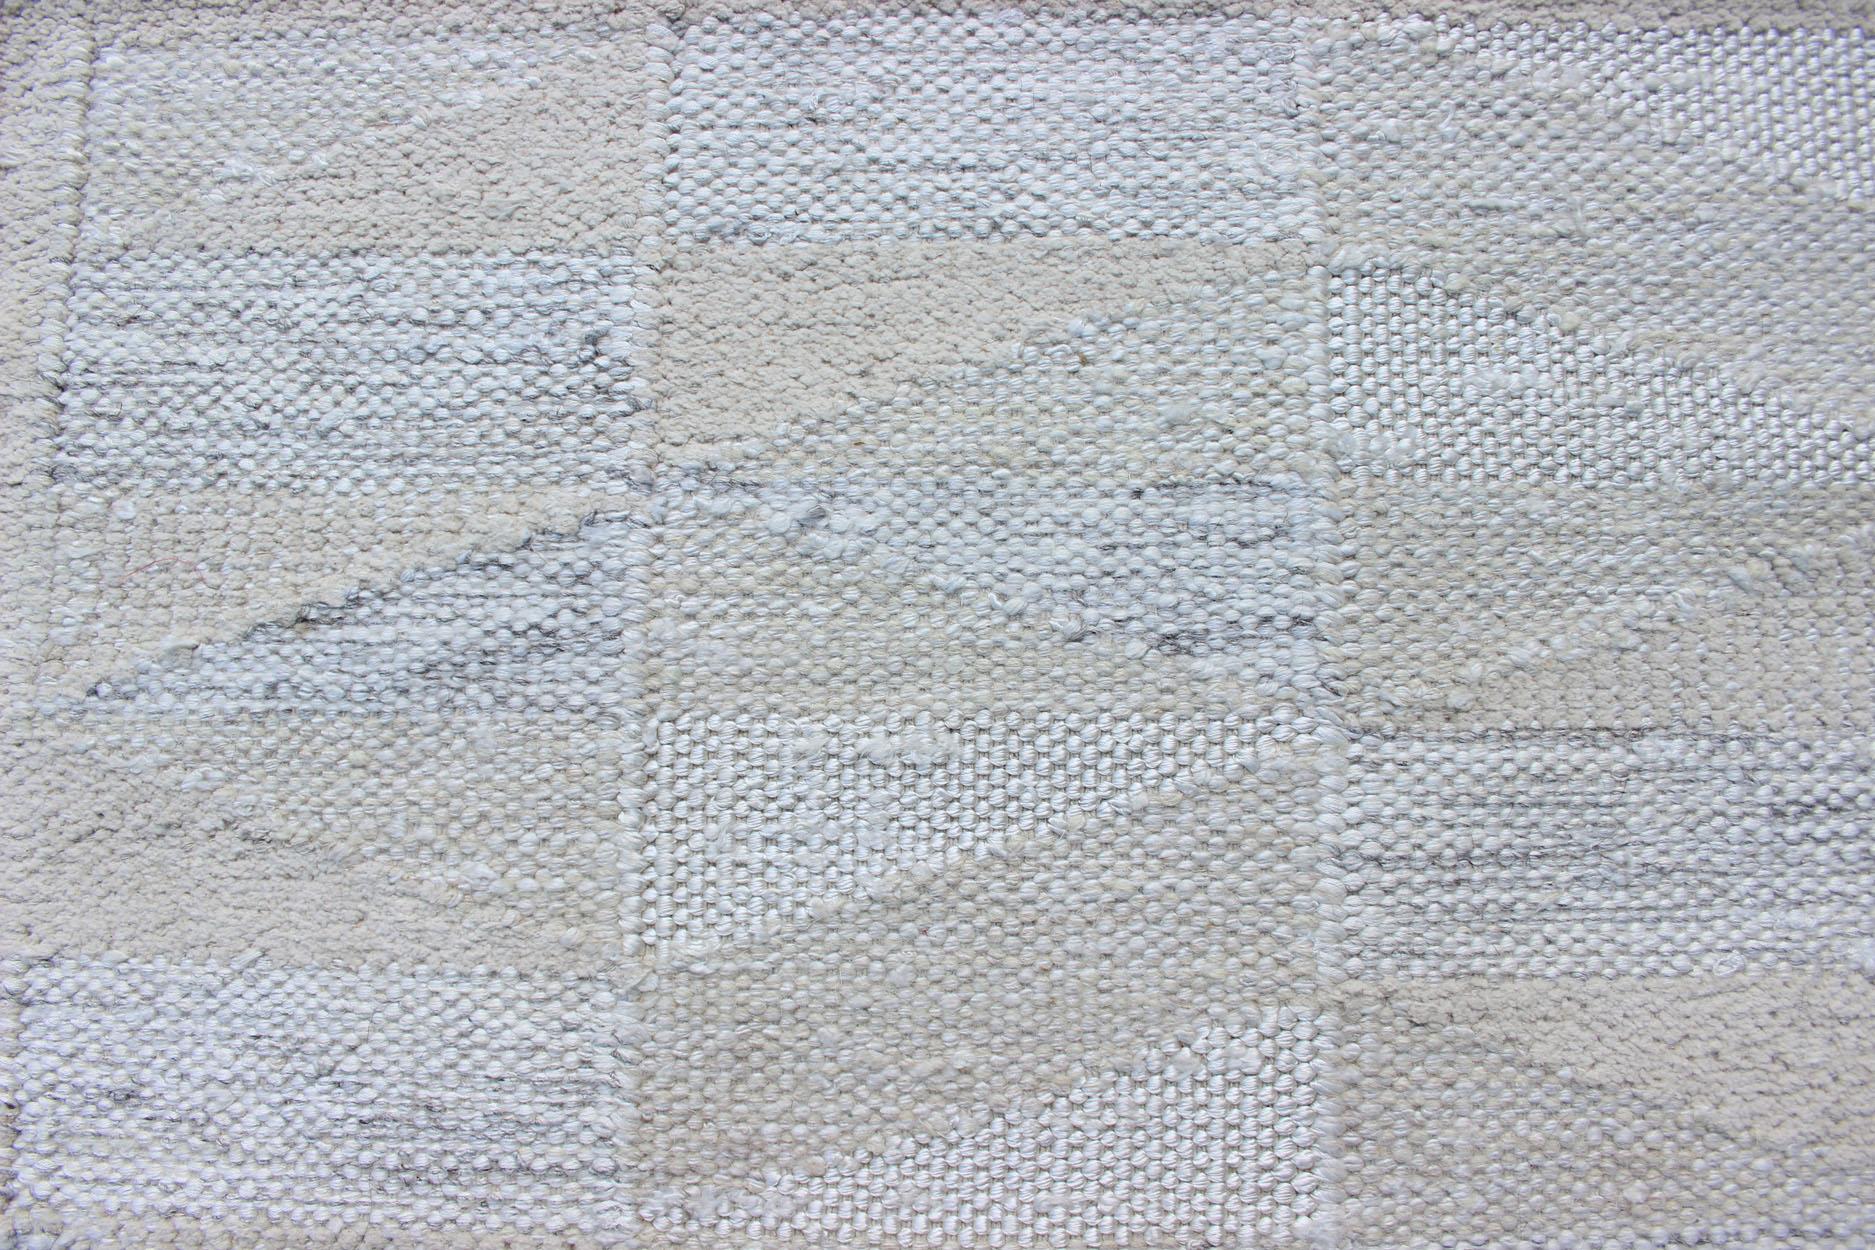 Modern Design Scandinavian Flat-Weave Rug in Gray, Tan, Taupe and Cream 1